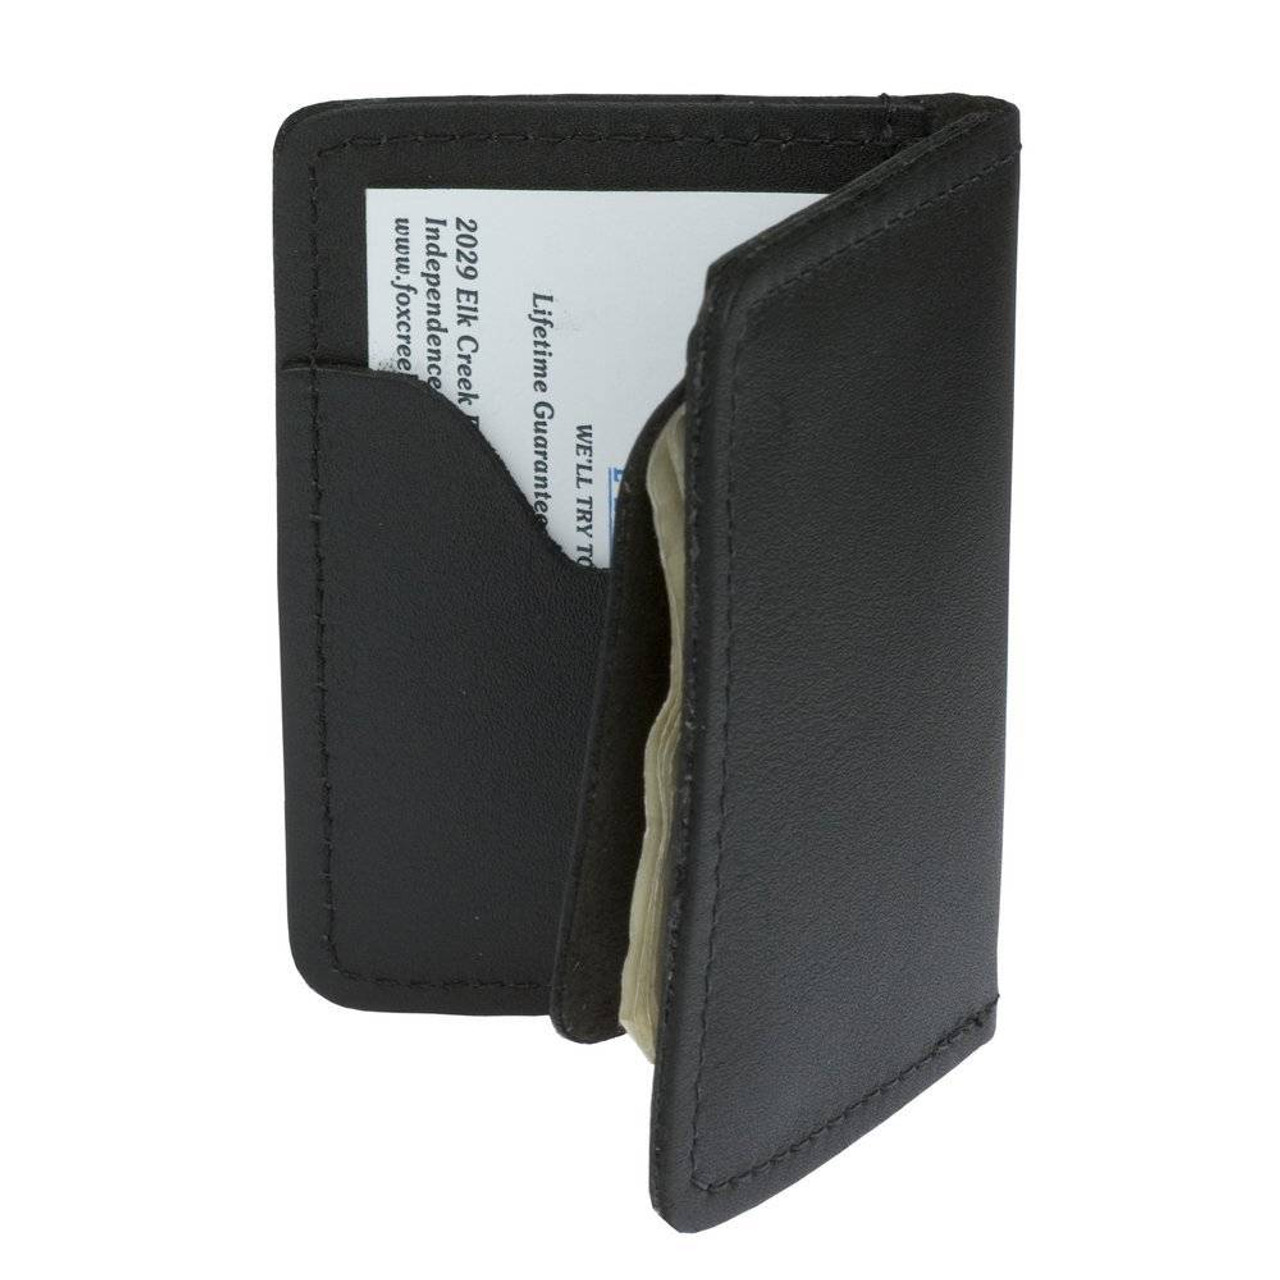 Money Clip Wallet - Coral Black – Leather Works Minnesota